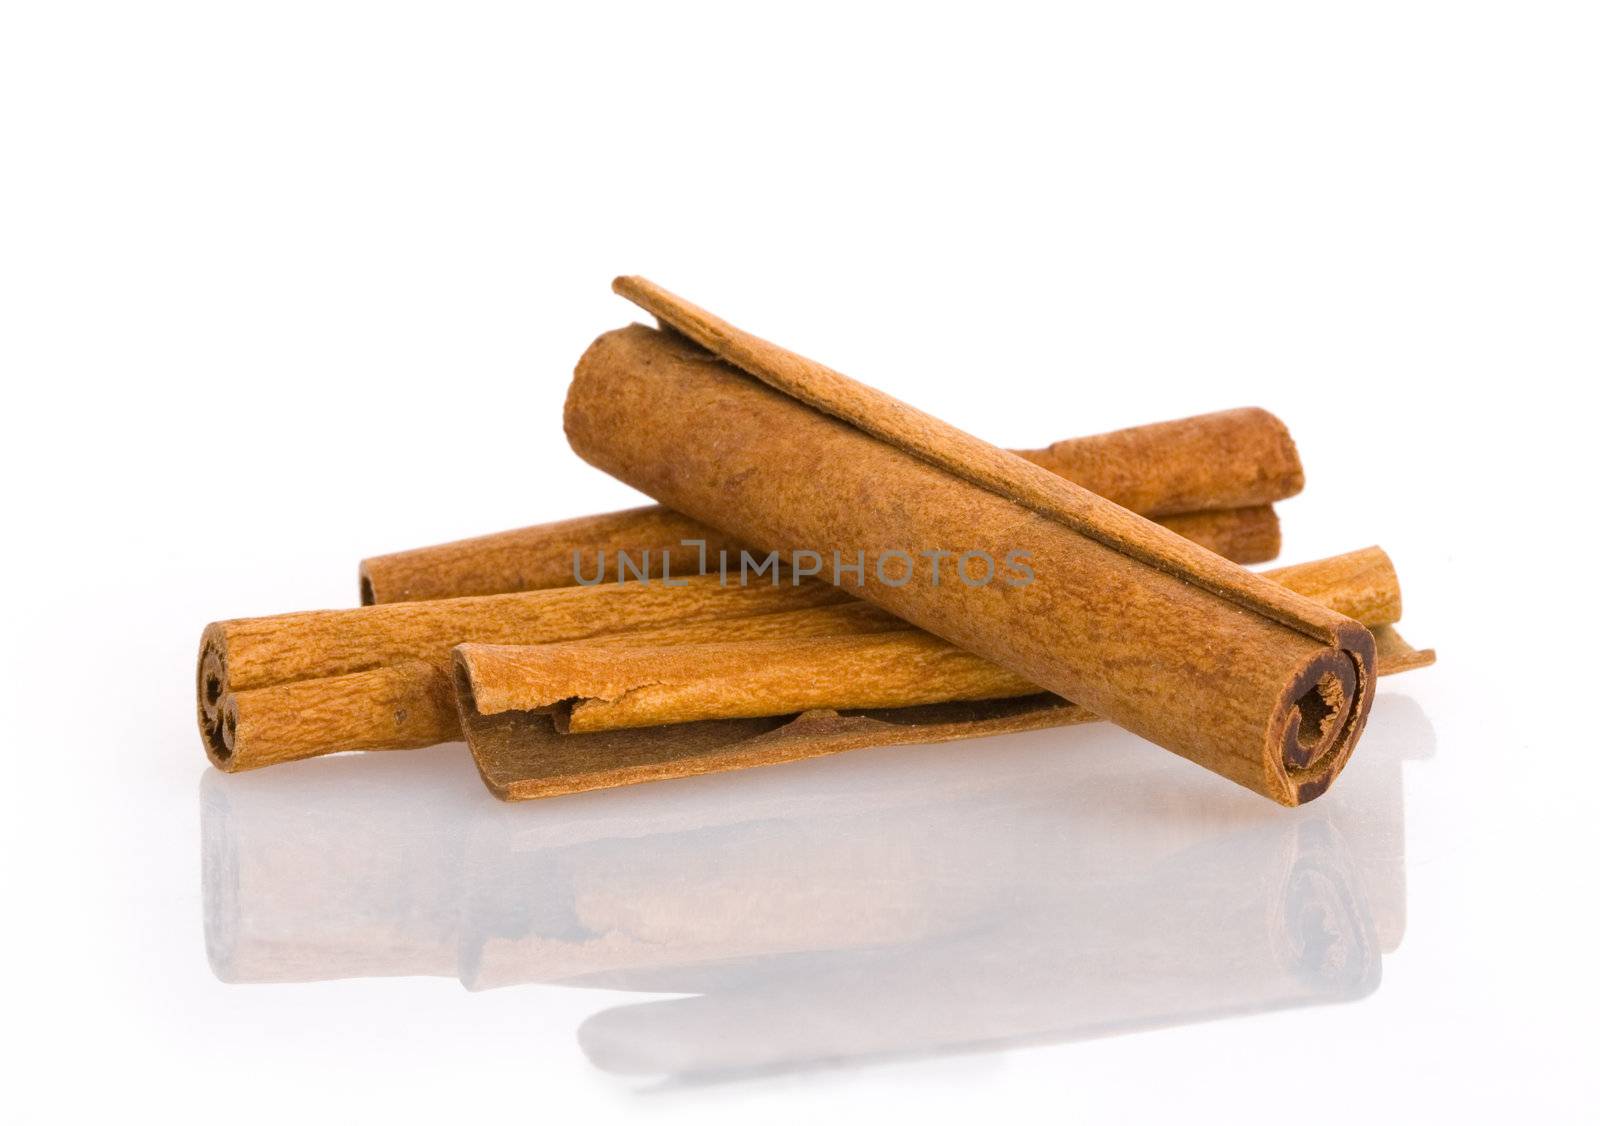 Cinnamon sticks by mihhailov